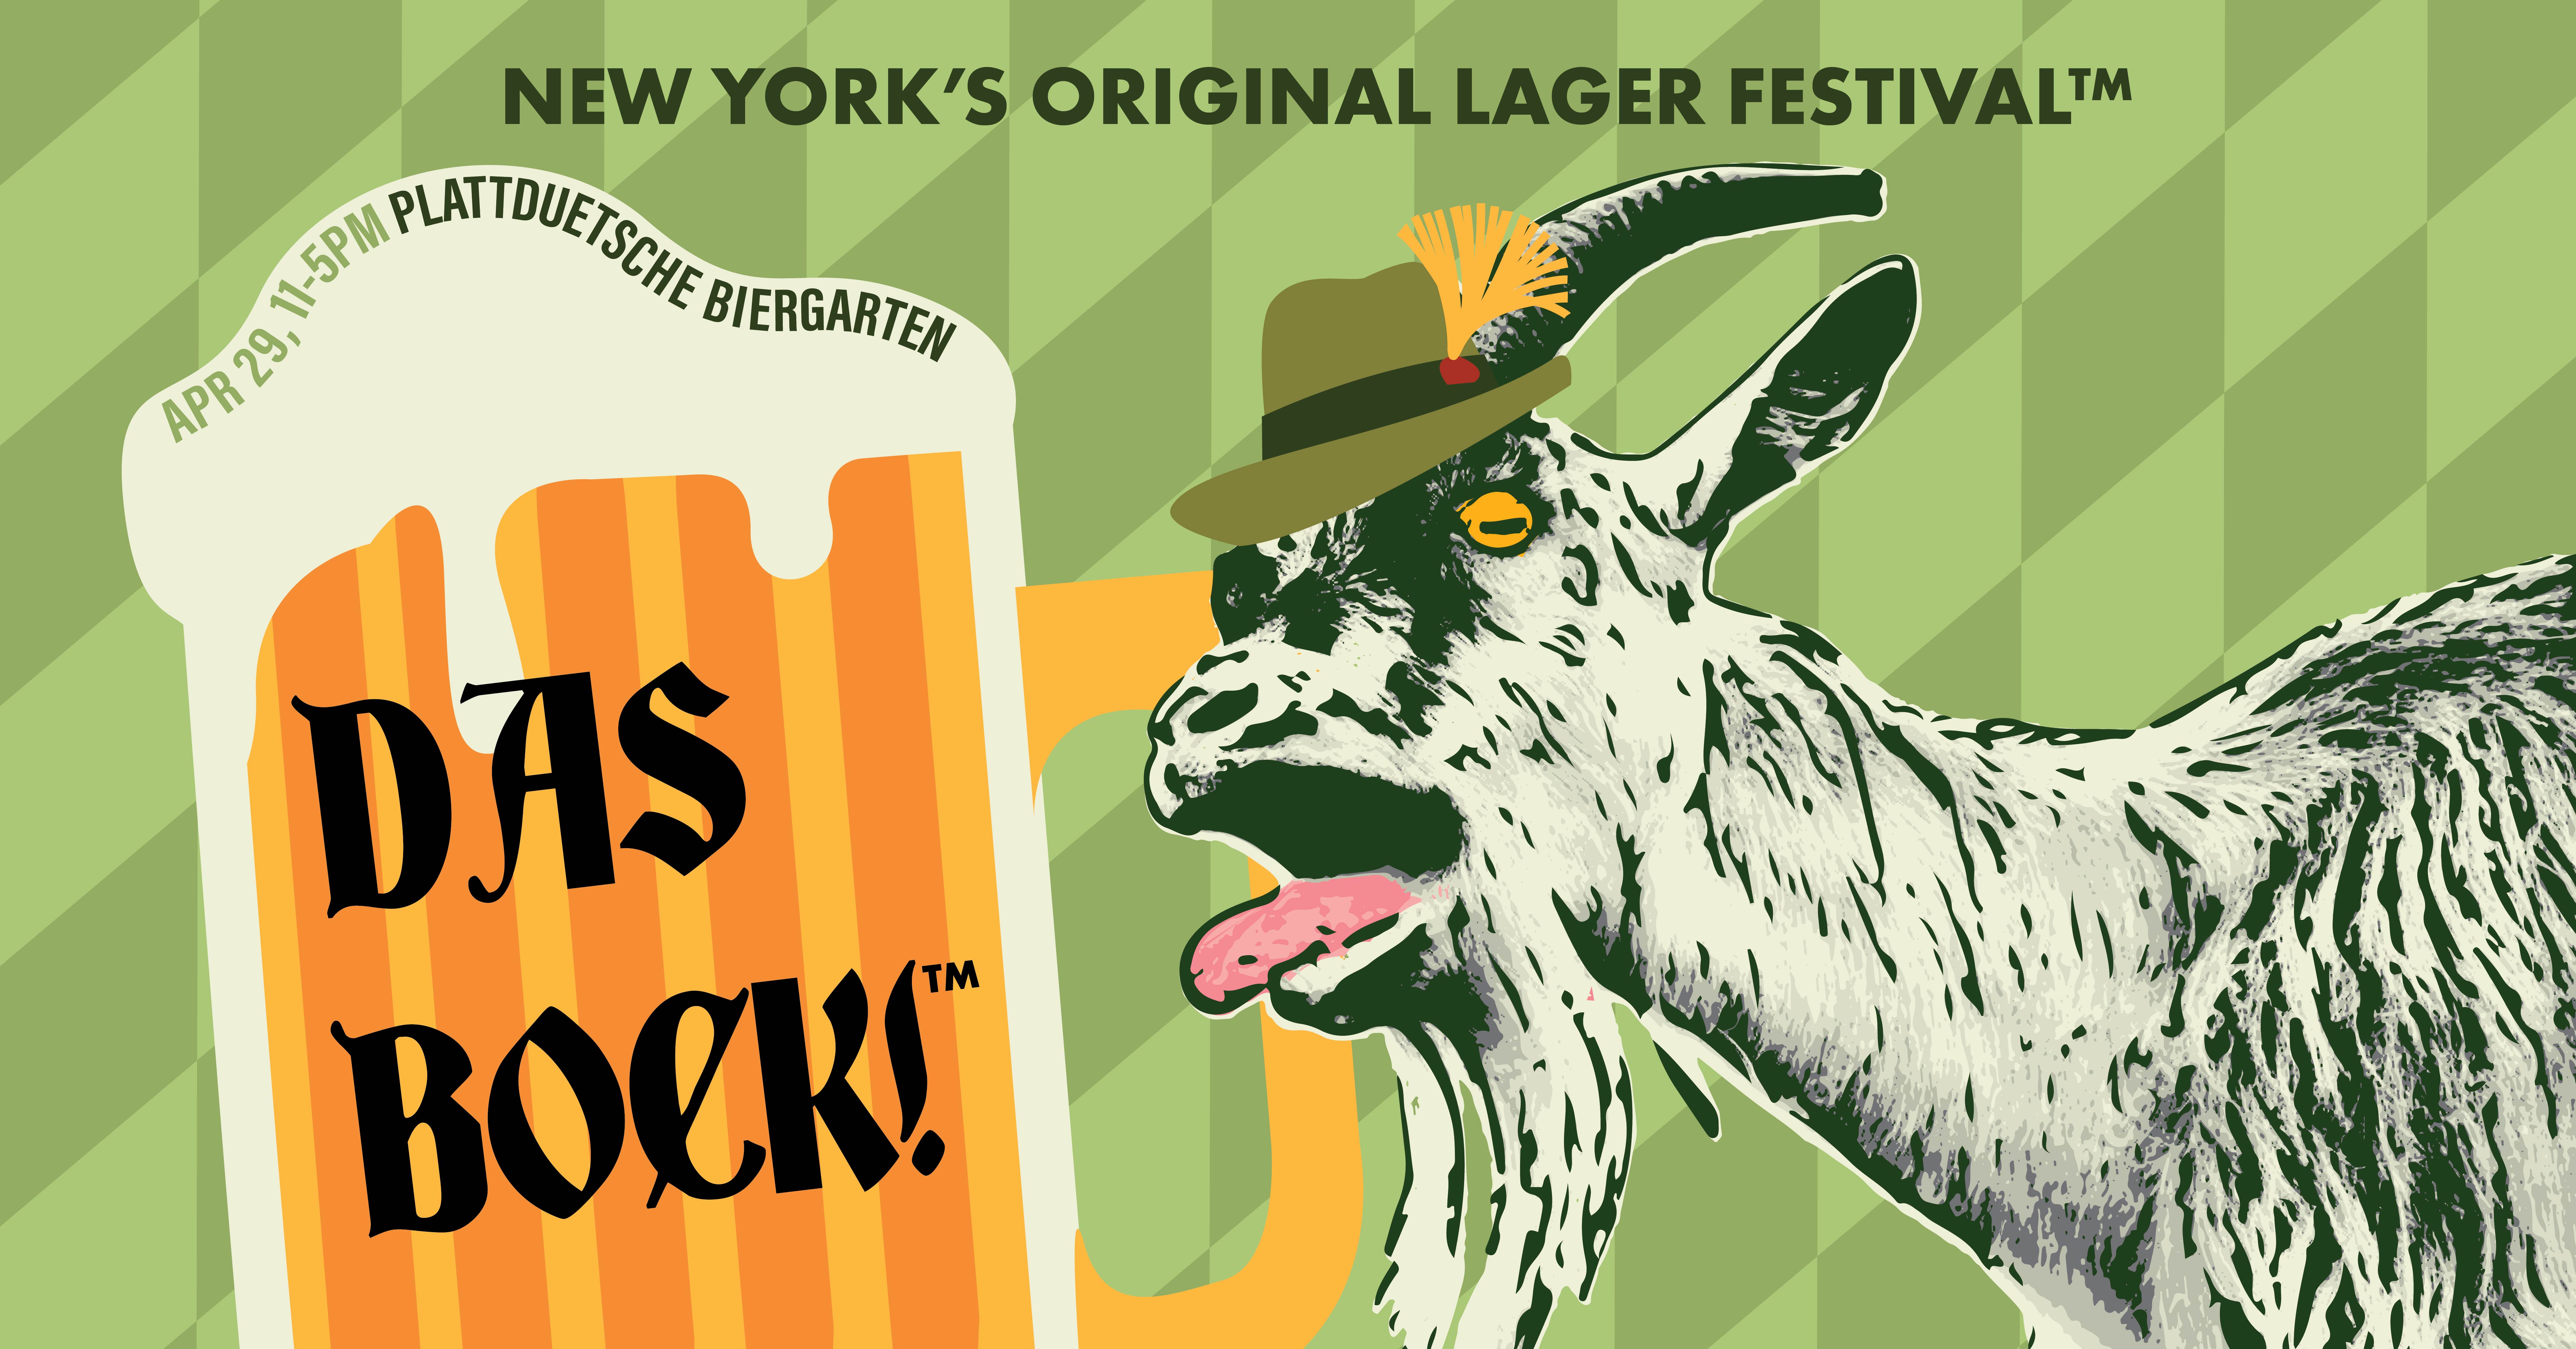 Das Bock - New York's Original Lager Festival™